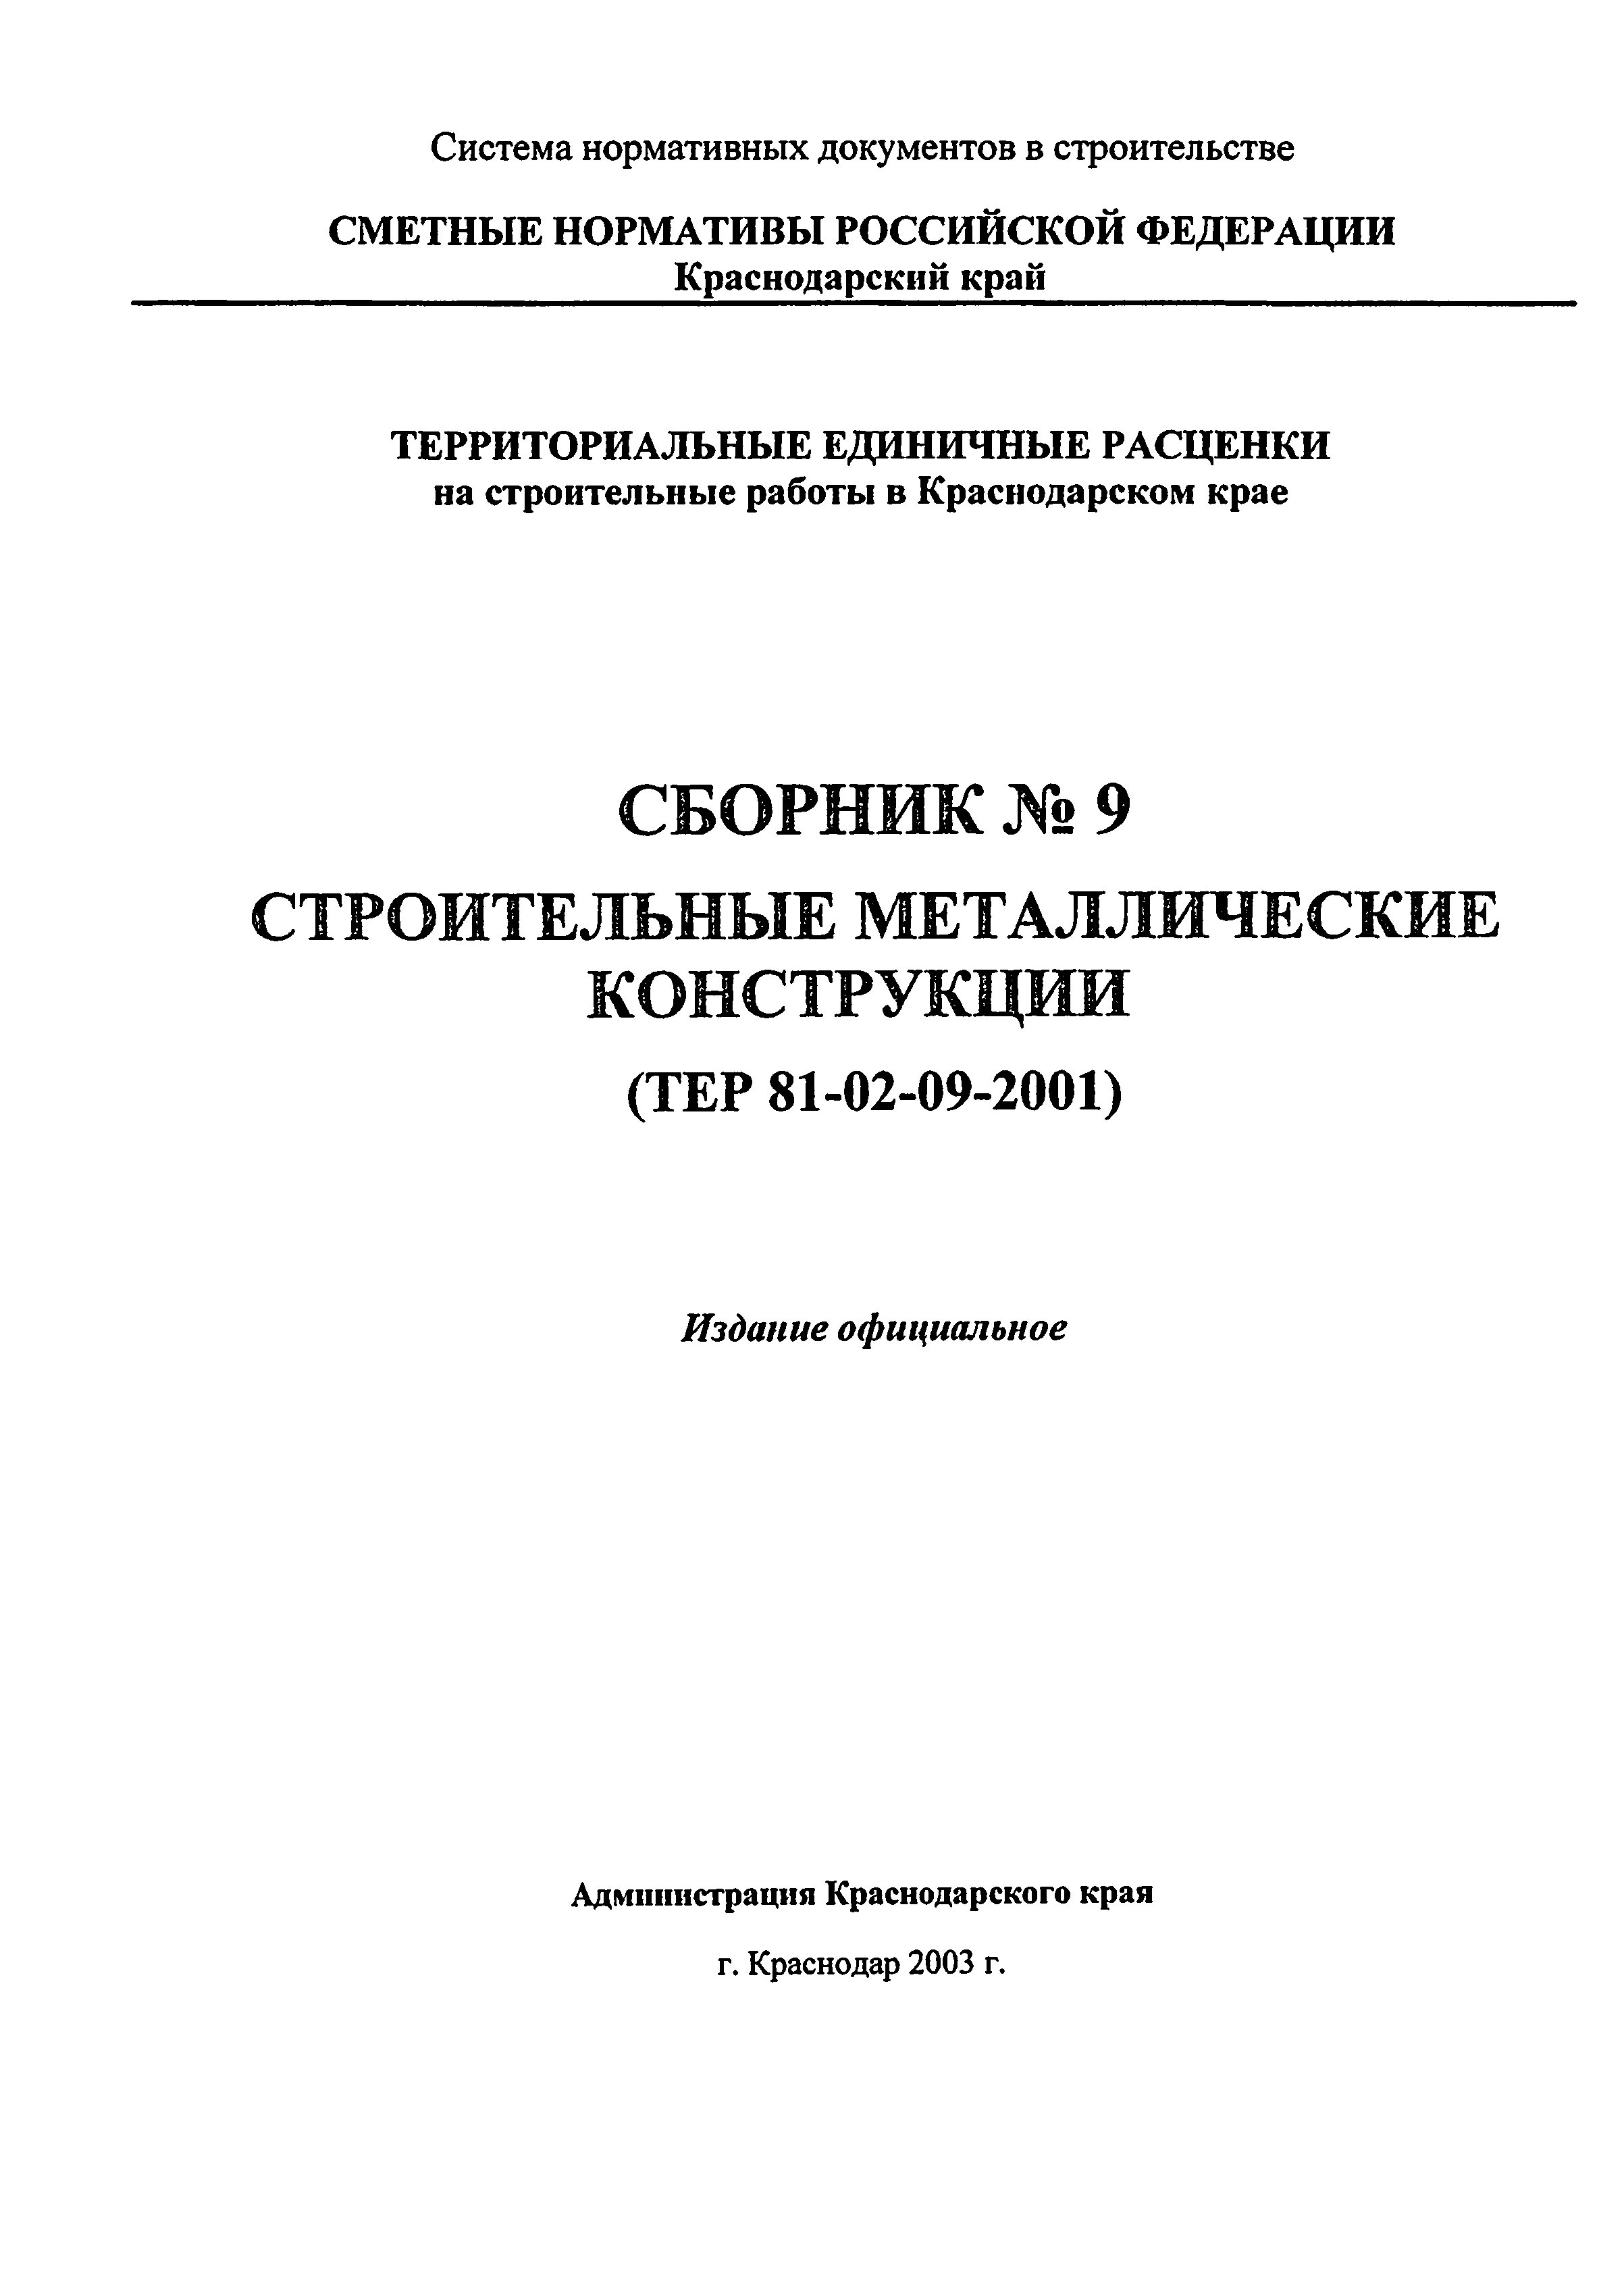 ТЕР Краснодарского края 2001-09